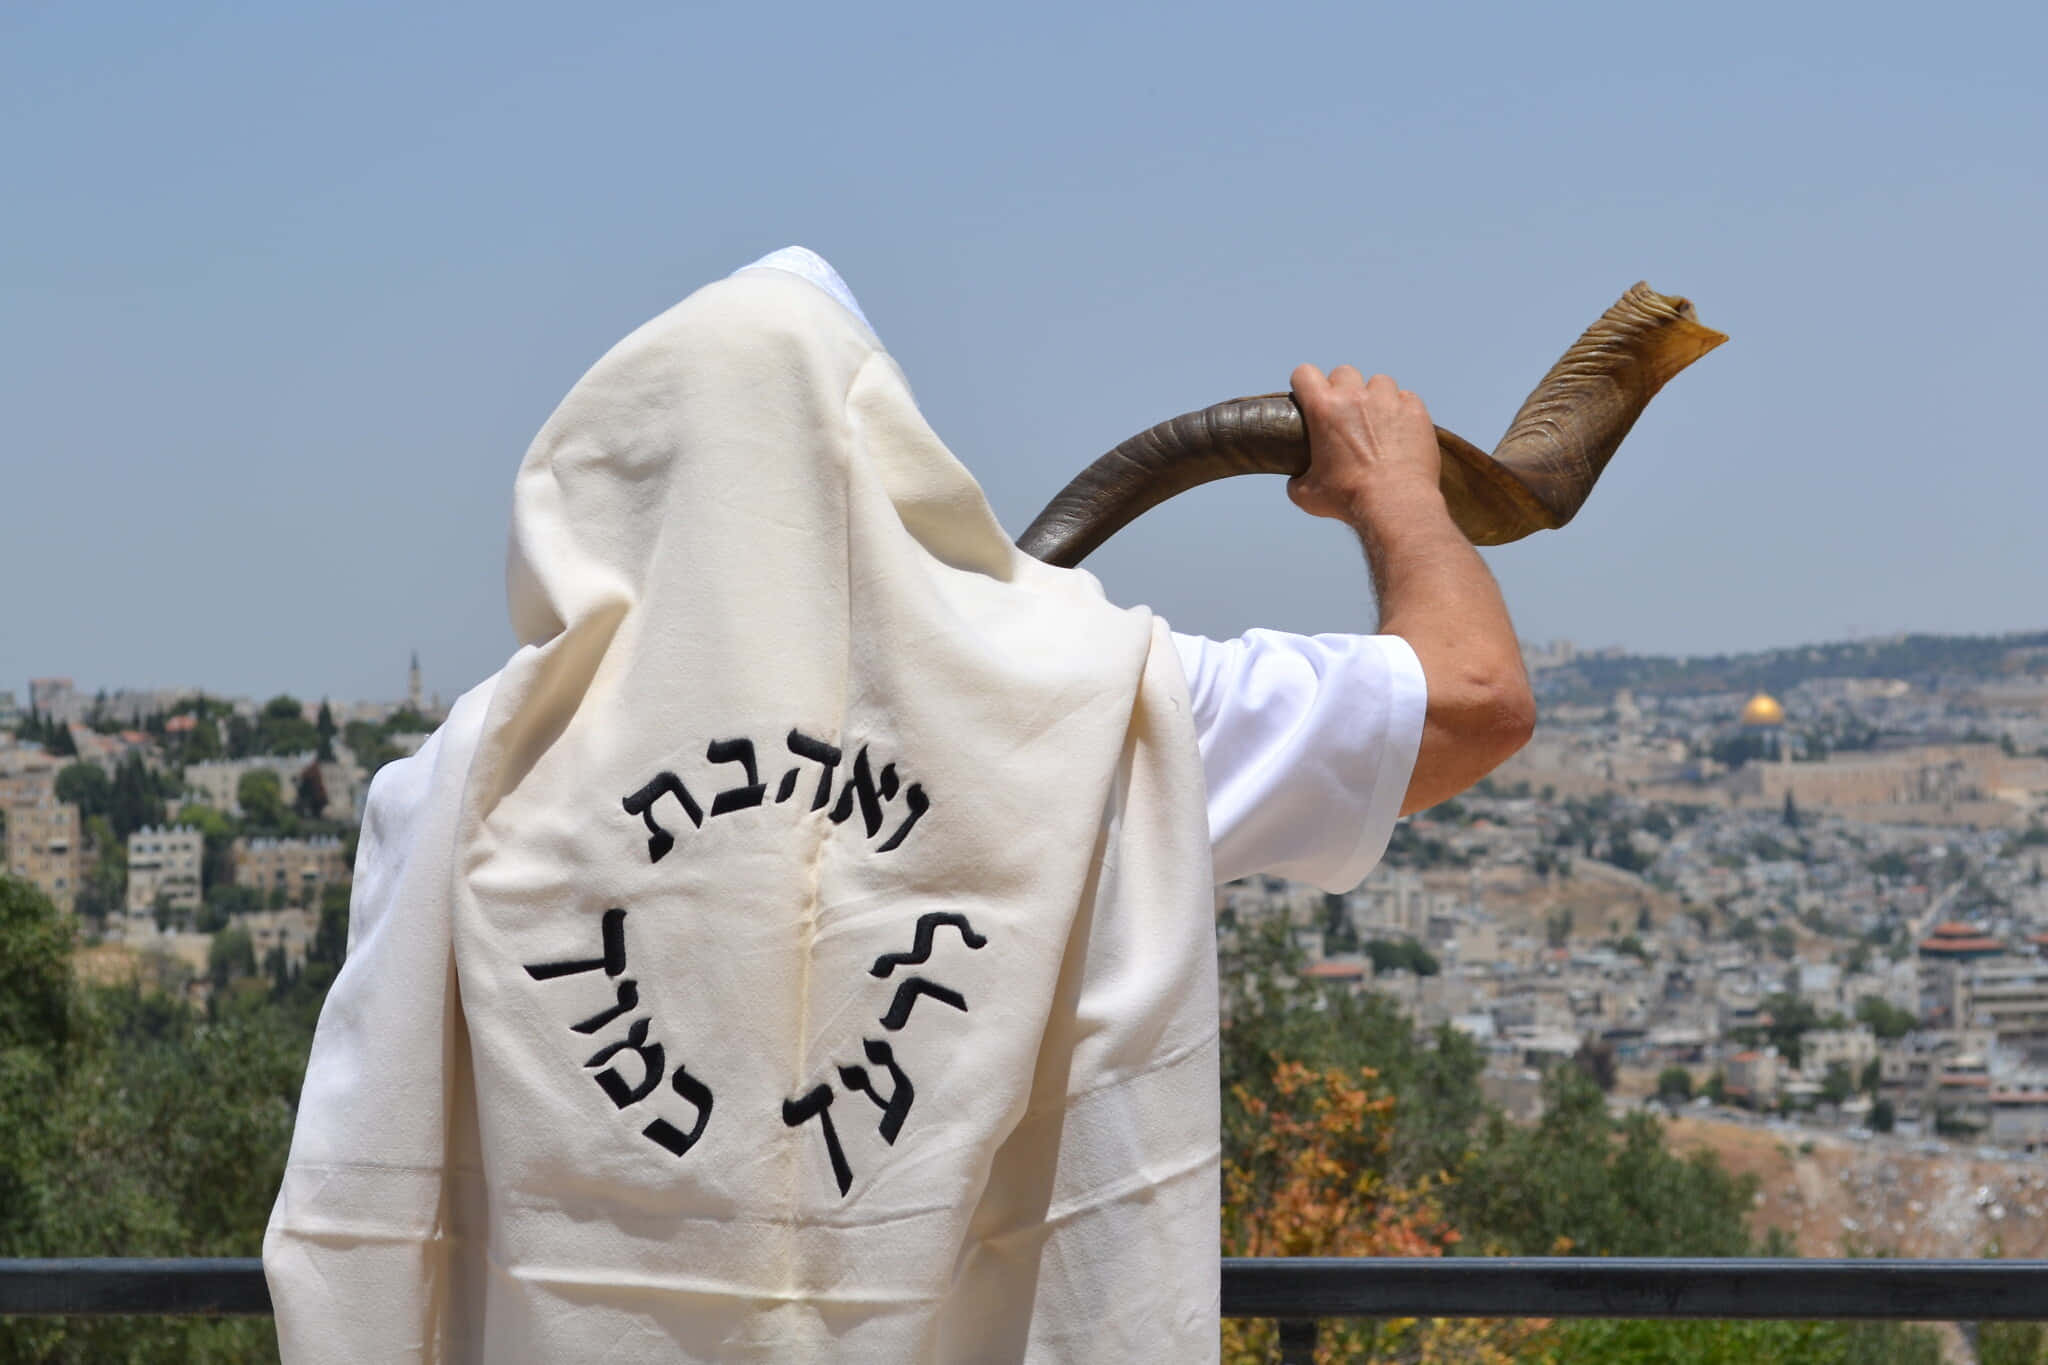 Caption: Celebrating Rosh Hashanah - Traditional Jewish New Year